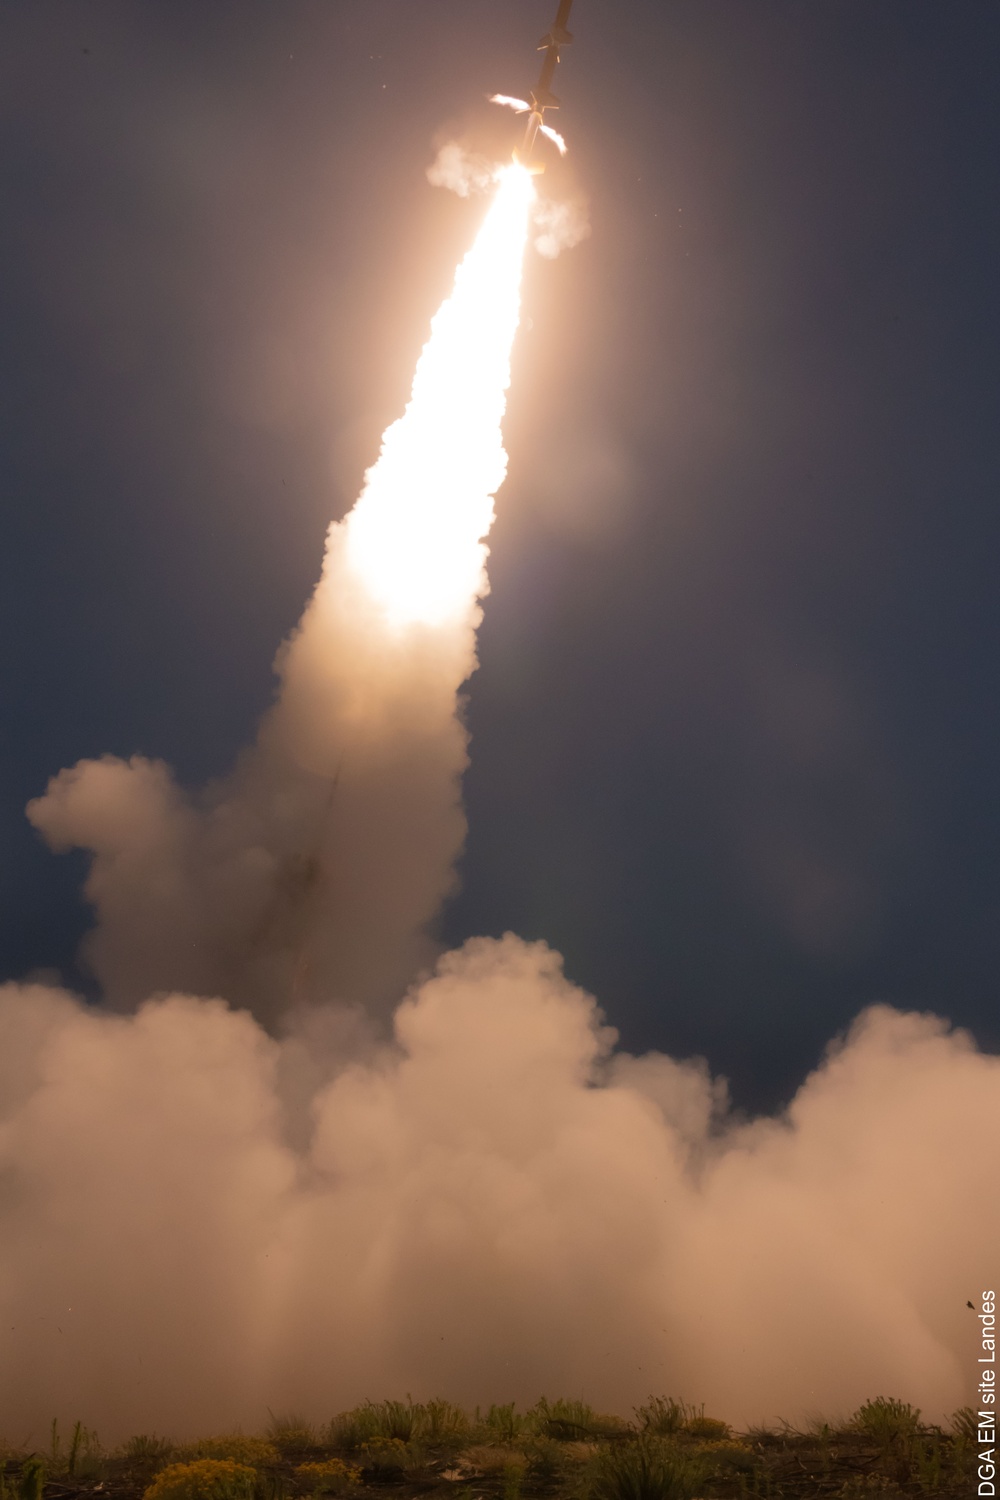 Naval Warfare Center Detachment’s Rocket Launch Propels First Flight of French Hypersonic Glider